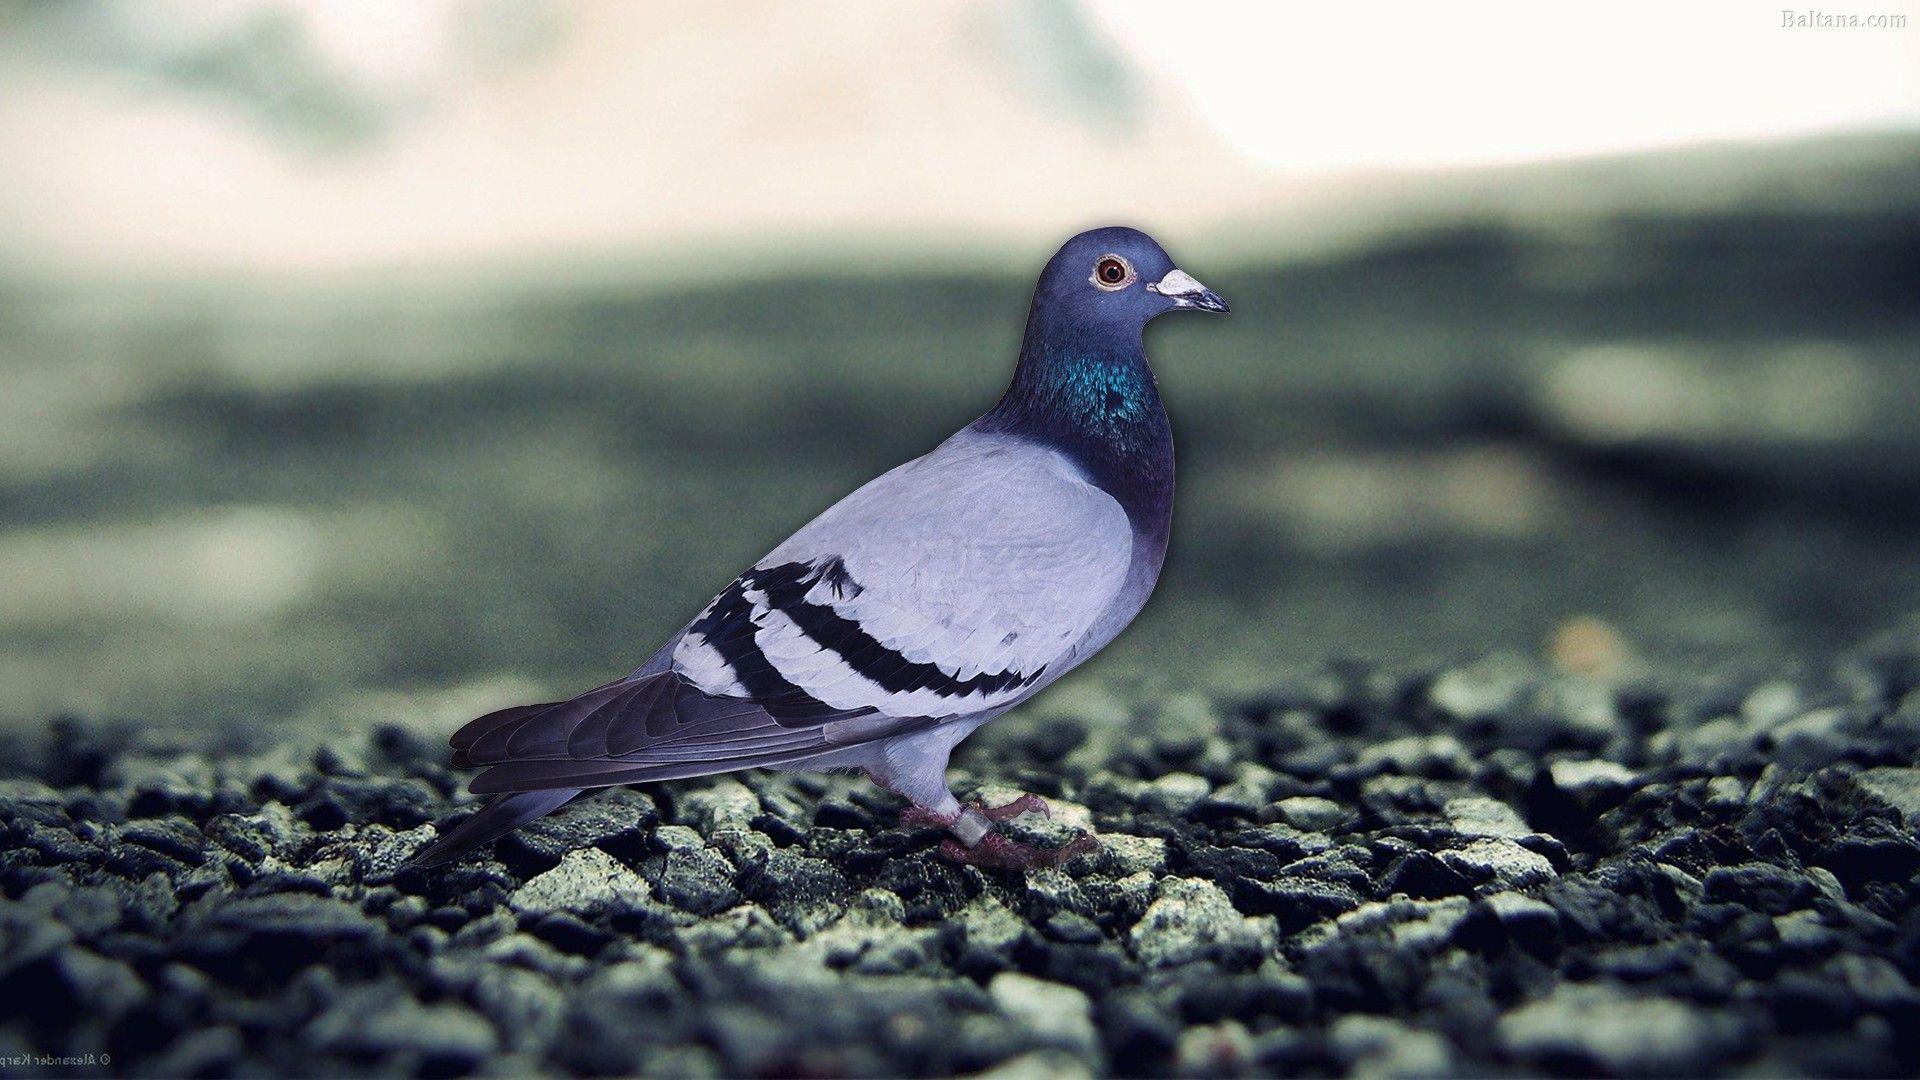 White Dove pigeon hogging 4K wallpaper download